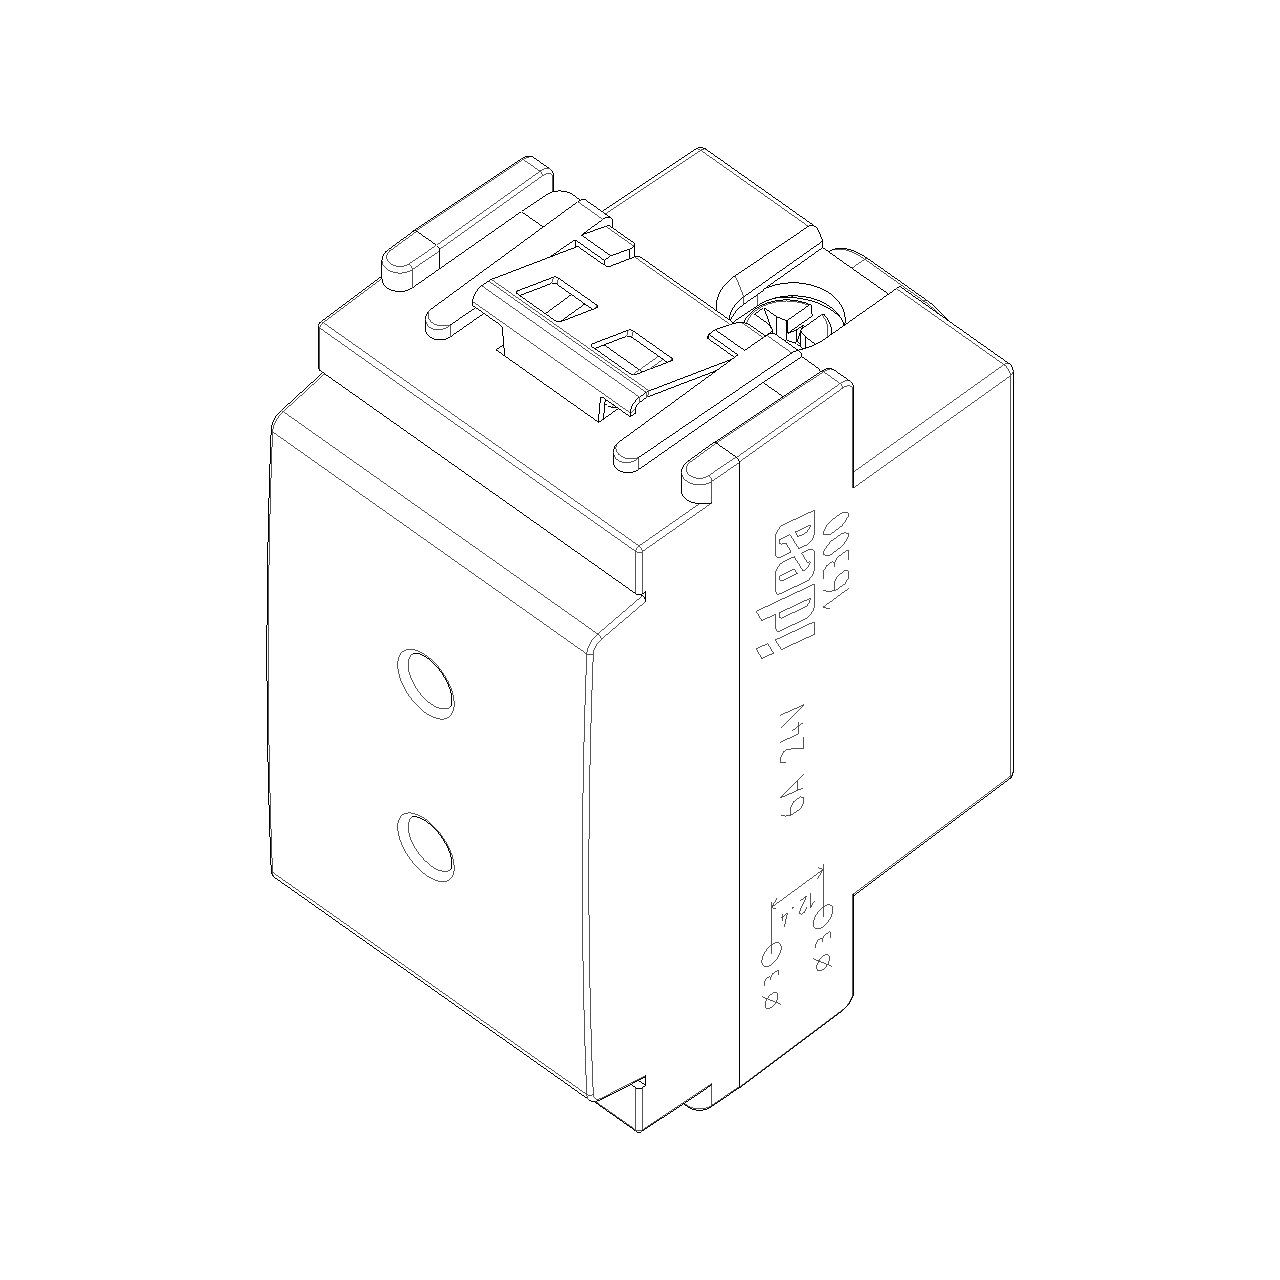 Vimar - Idea 16301 SELV Socket Outlet - Polarized 2P 6 A 24 V, IP20, Plastic - Apollo Lighting